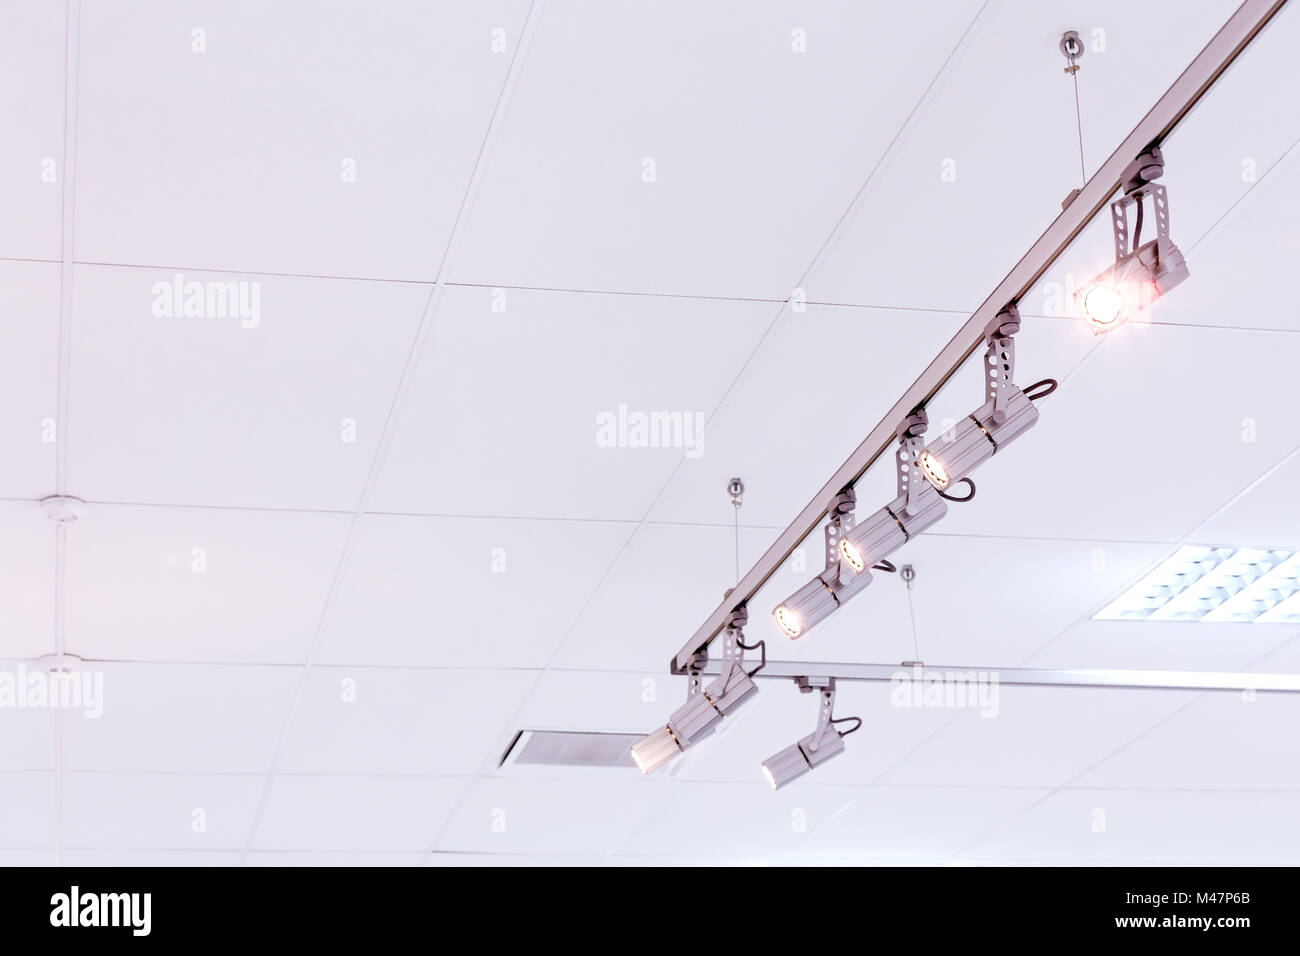 exhibition lighting rig Stock Photo